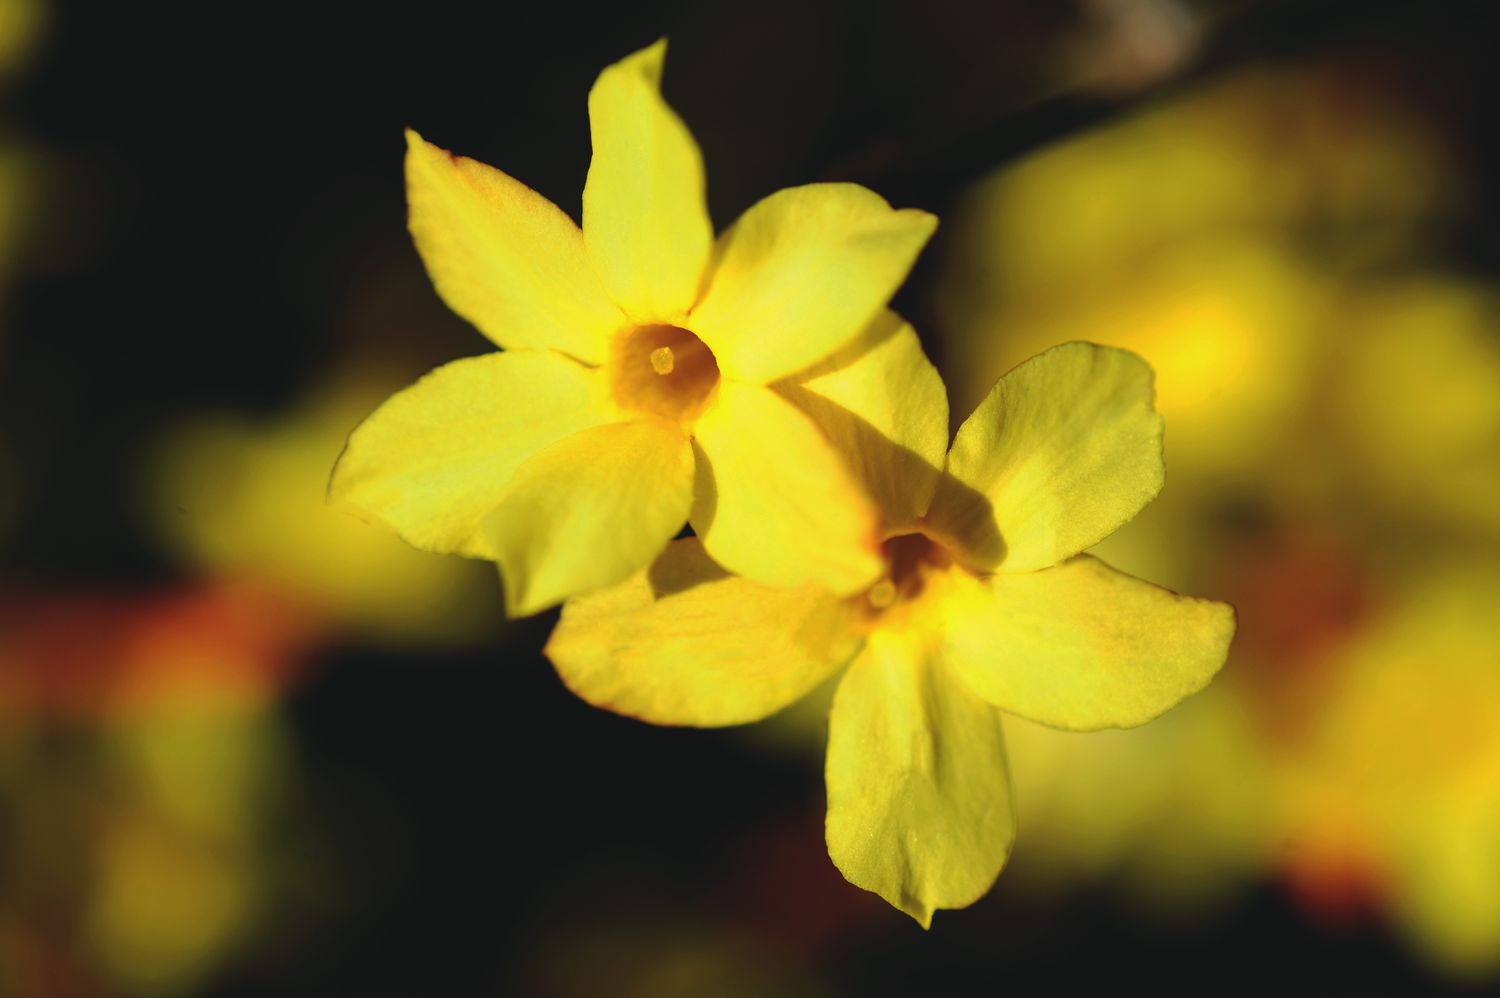 Winterjasmin mit gelben Blüten in Nahaufnahme